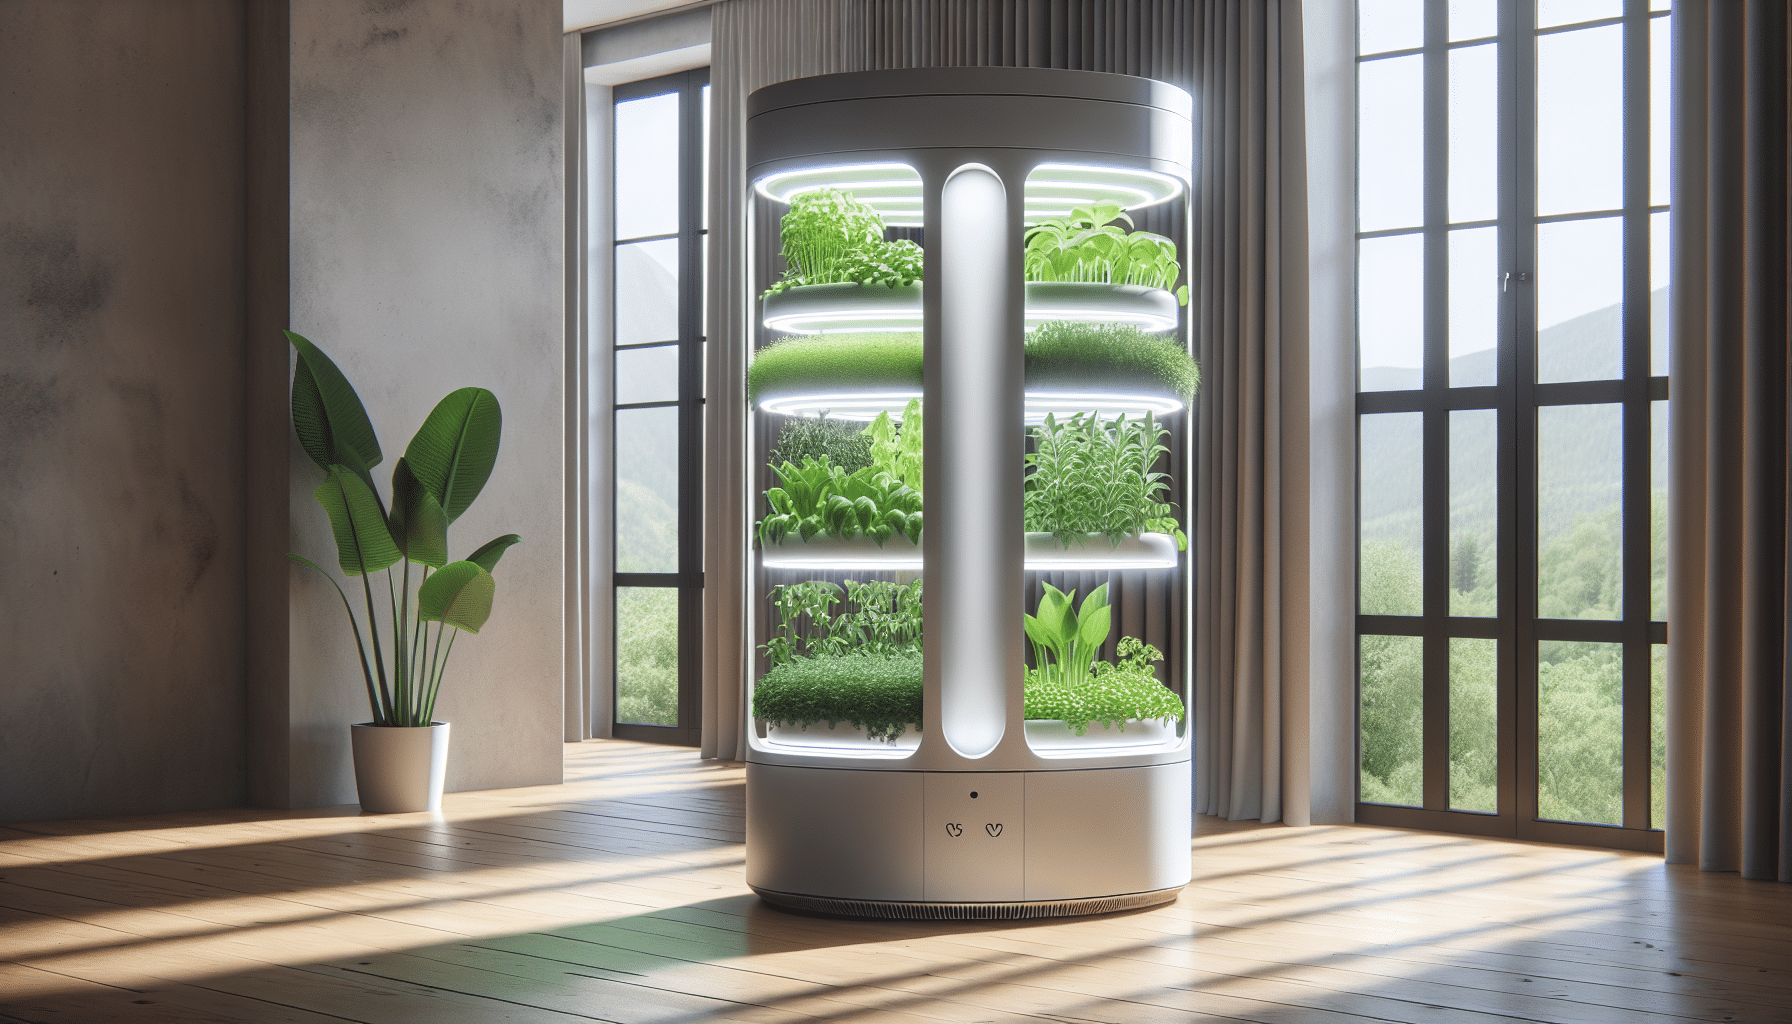 Nutraponics tower garden technology